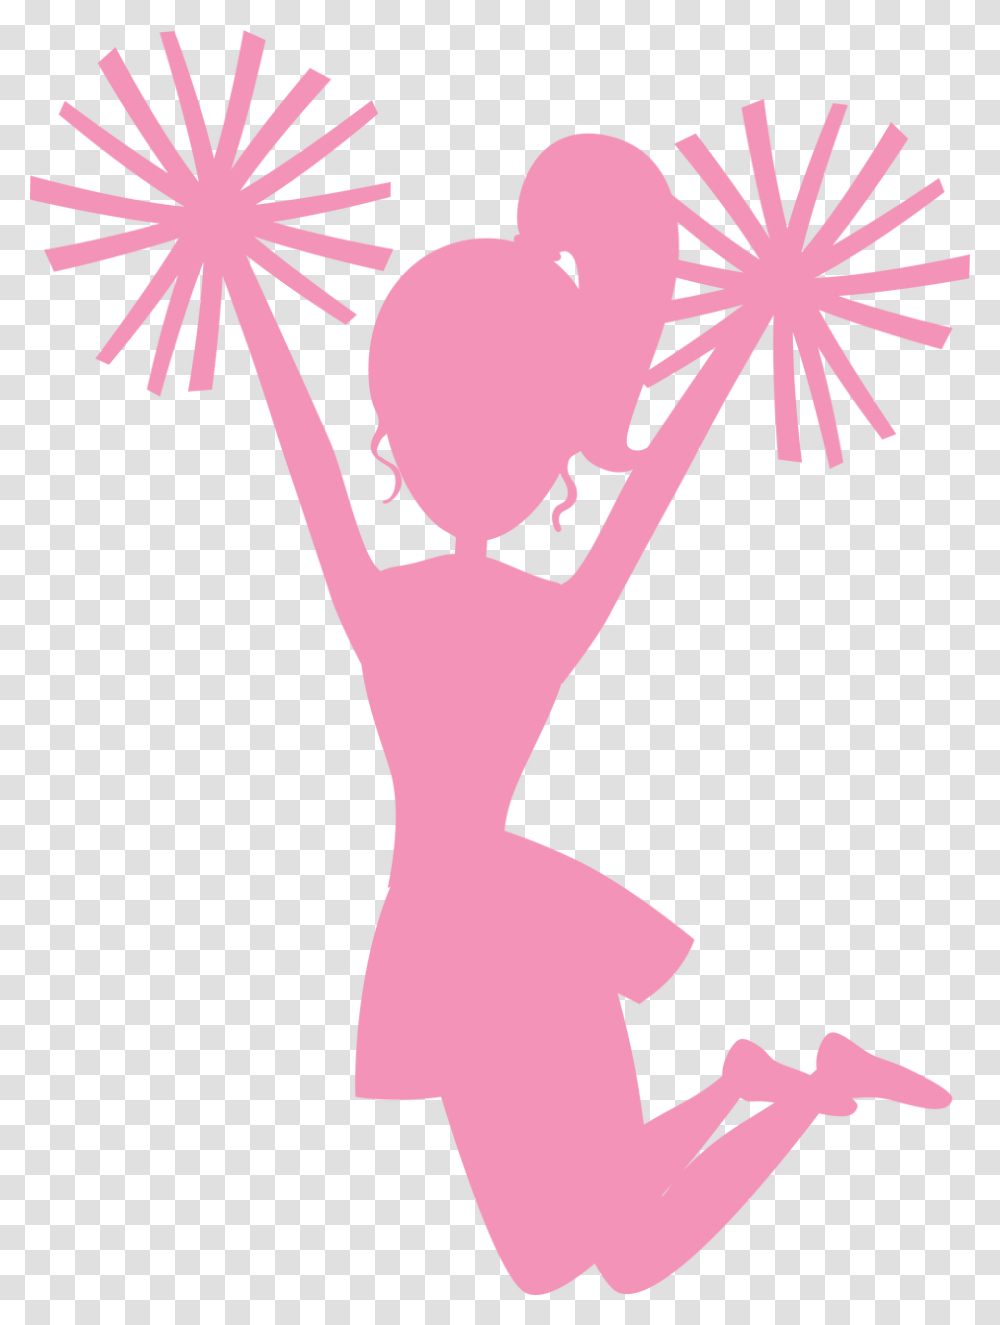 Cheer Silhouette Pink Cheerleader Cartoon, Hand, Poster Transparent Png